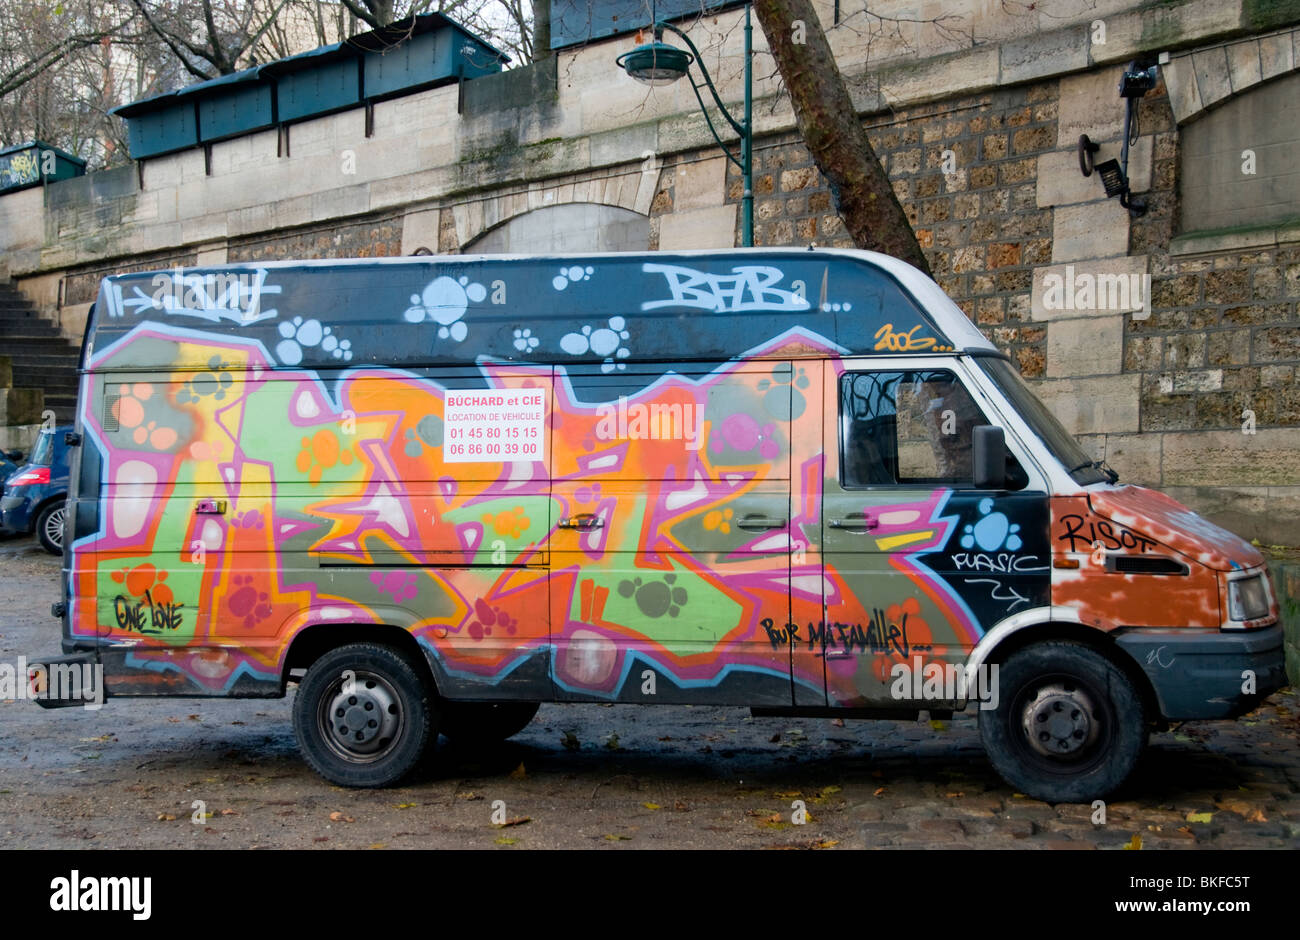 Graffiti on a van in Paris France Stock Photo - Alamy